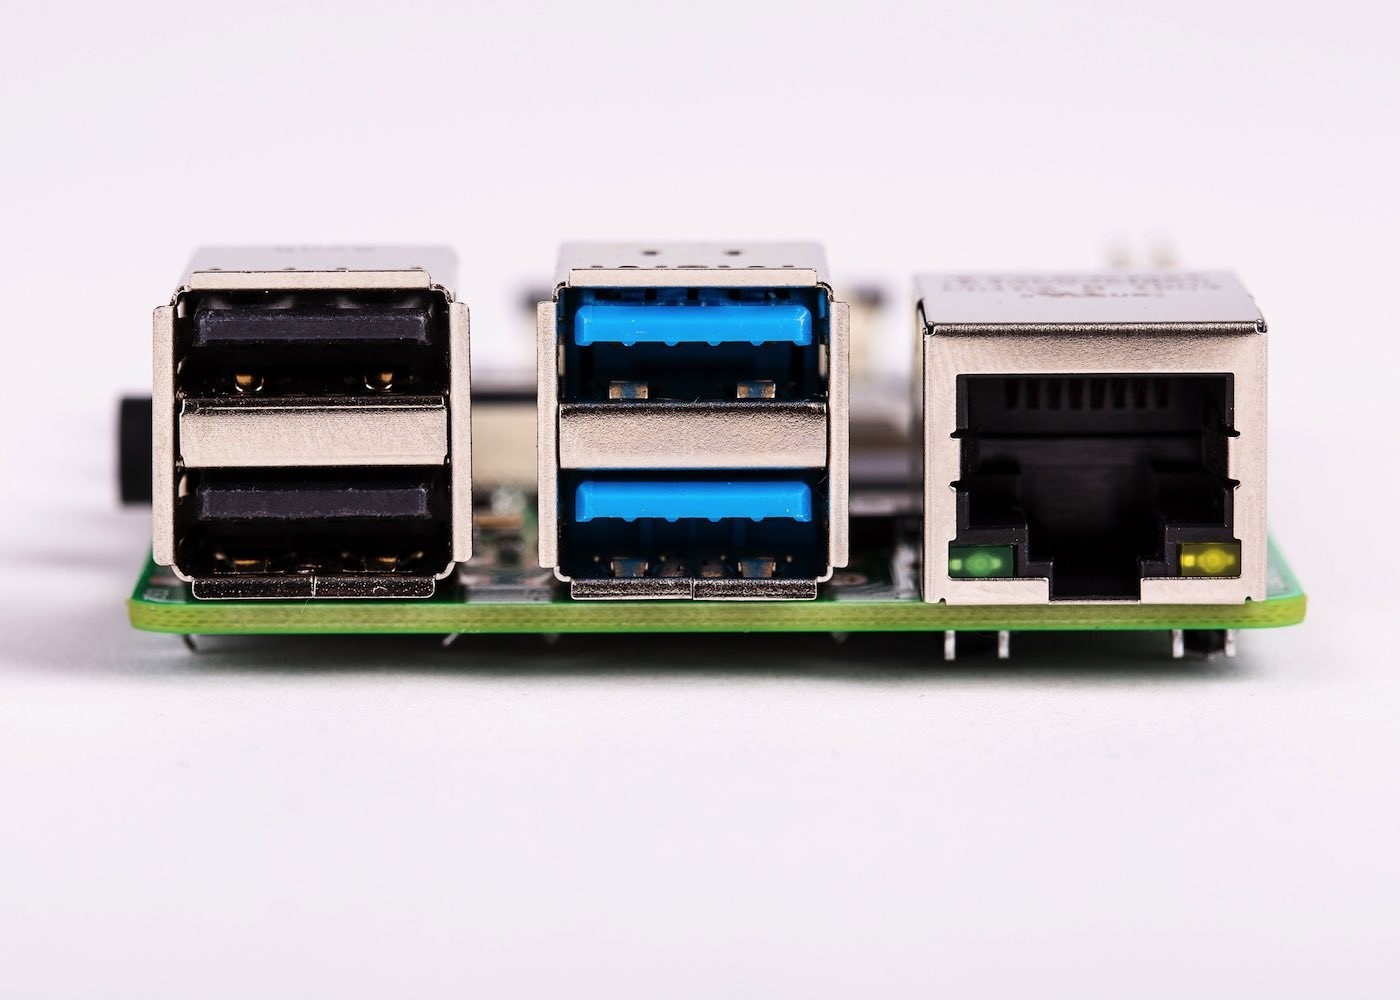 Raspberry Pi 4 - 2GB RAM | Made in the UK